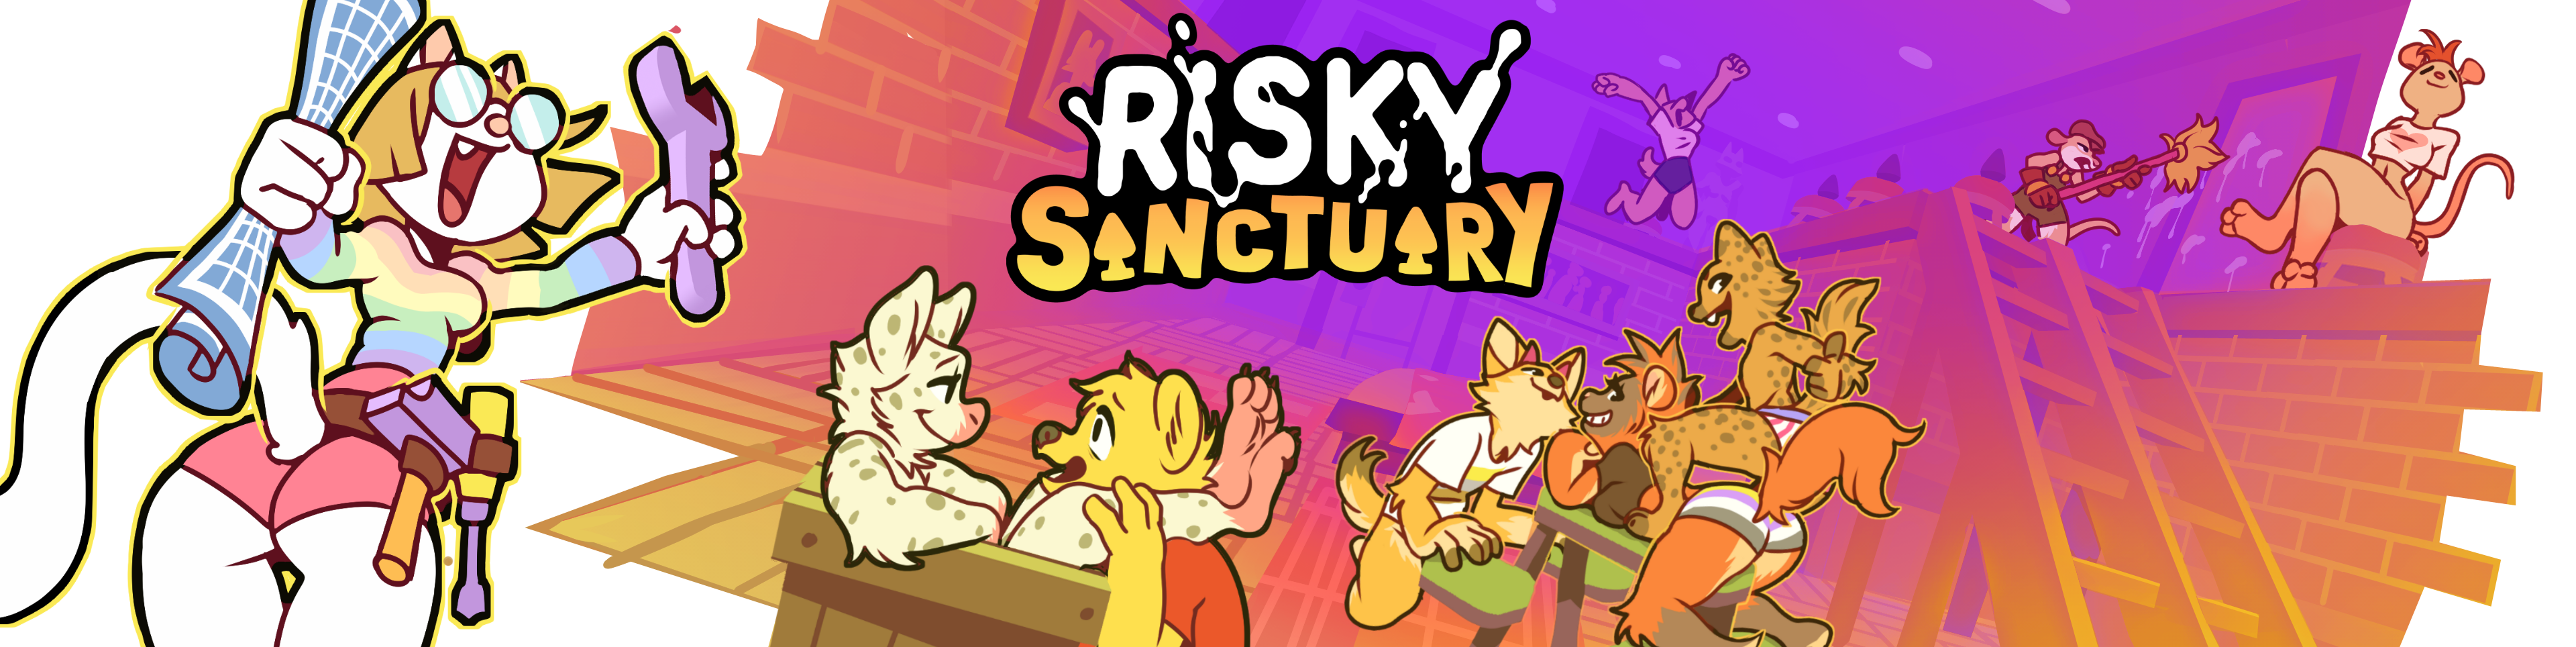 Risky Sanctuary (+18)